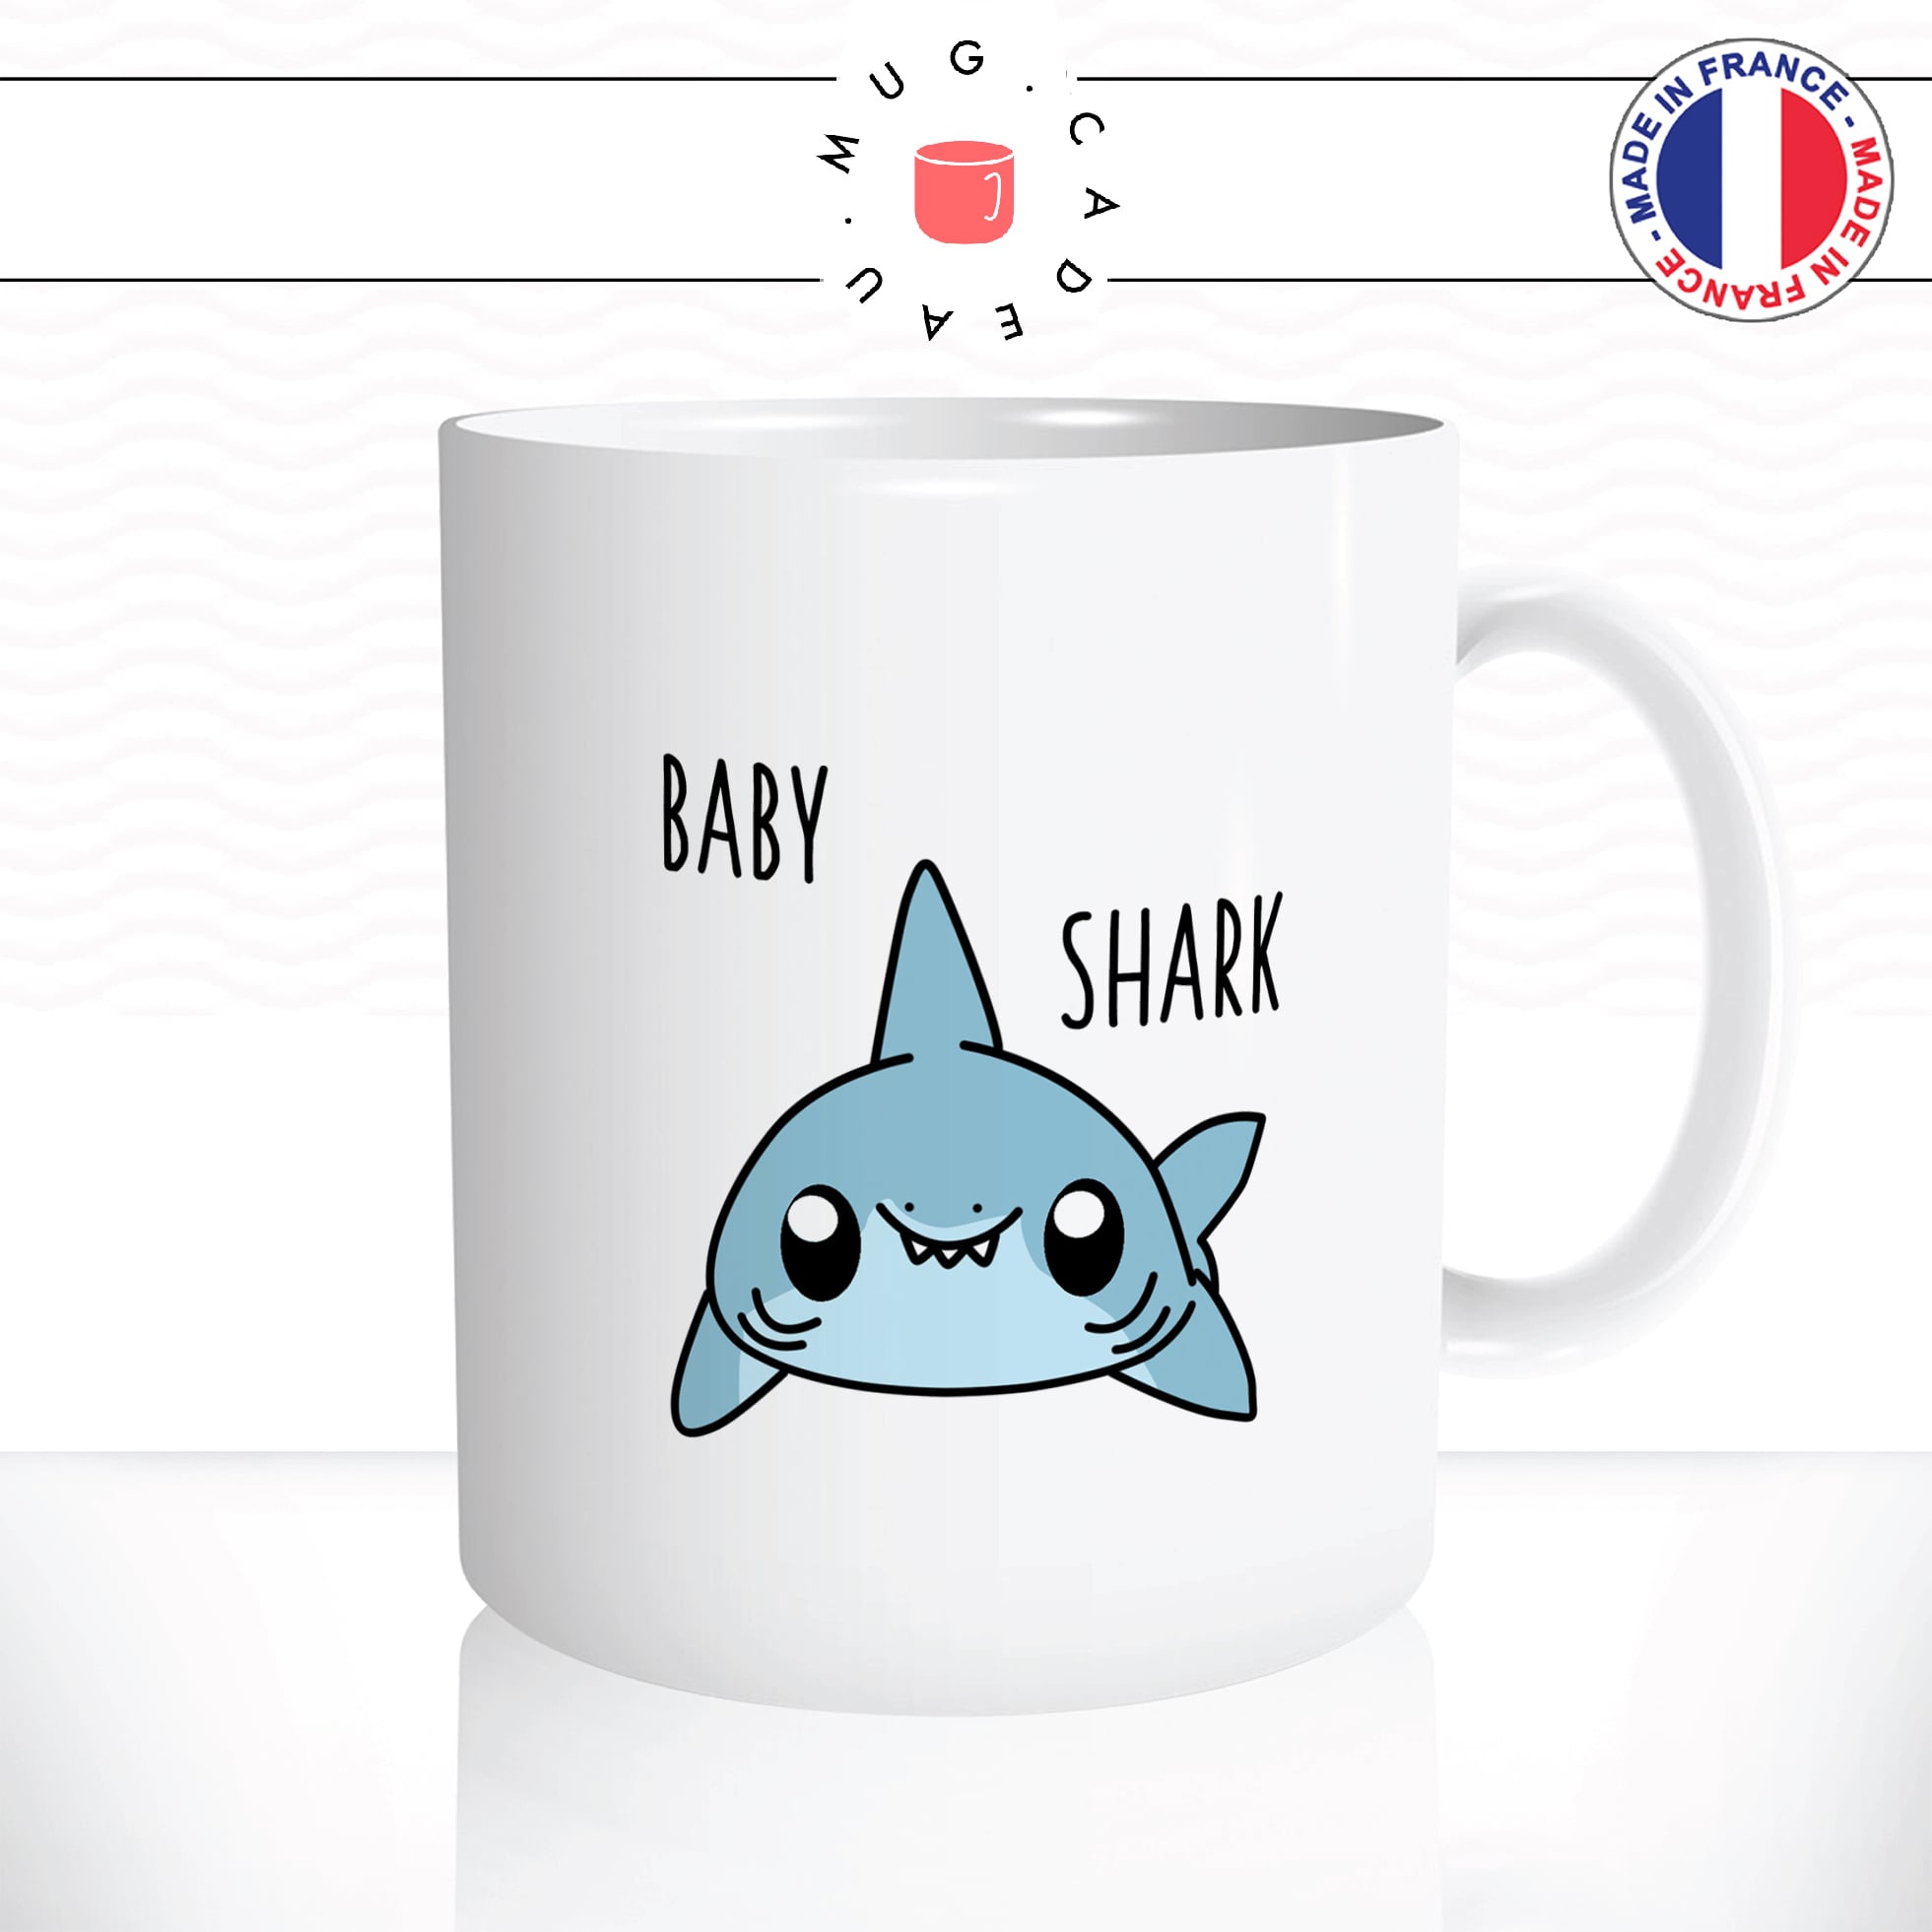 mug-tasse-baby-shark-requin-poisson-dessin-anime-bébé-mignon-idee-cadeau-enfant